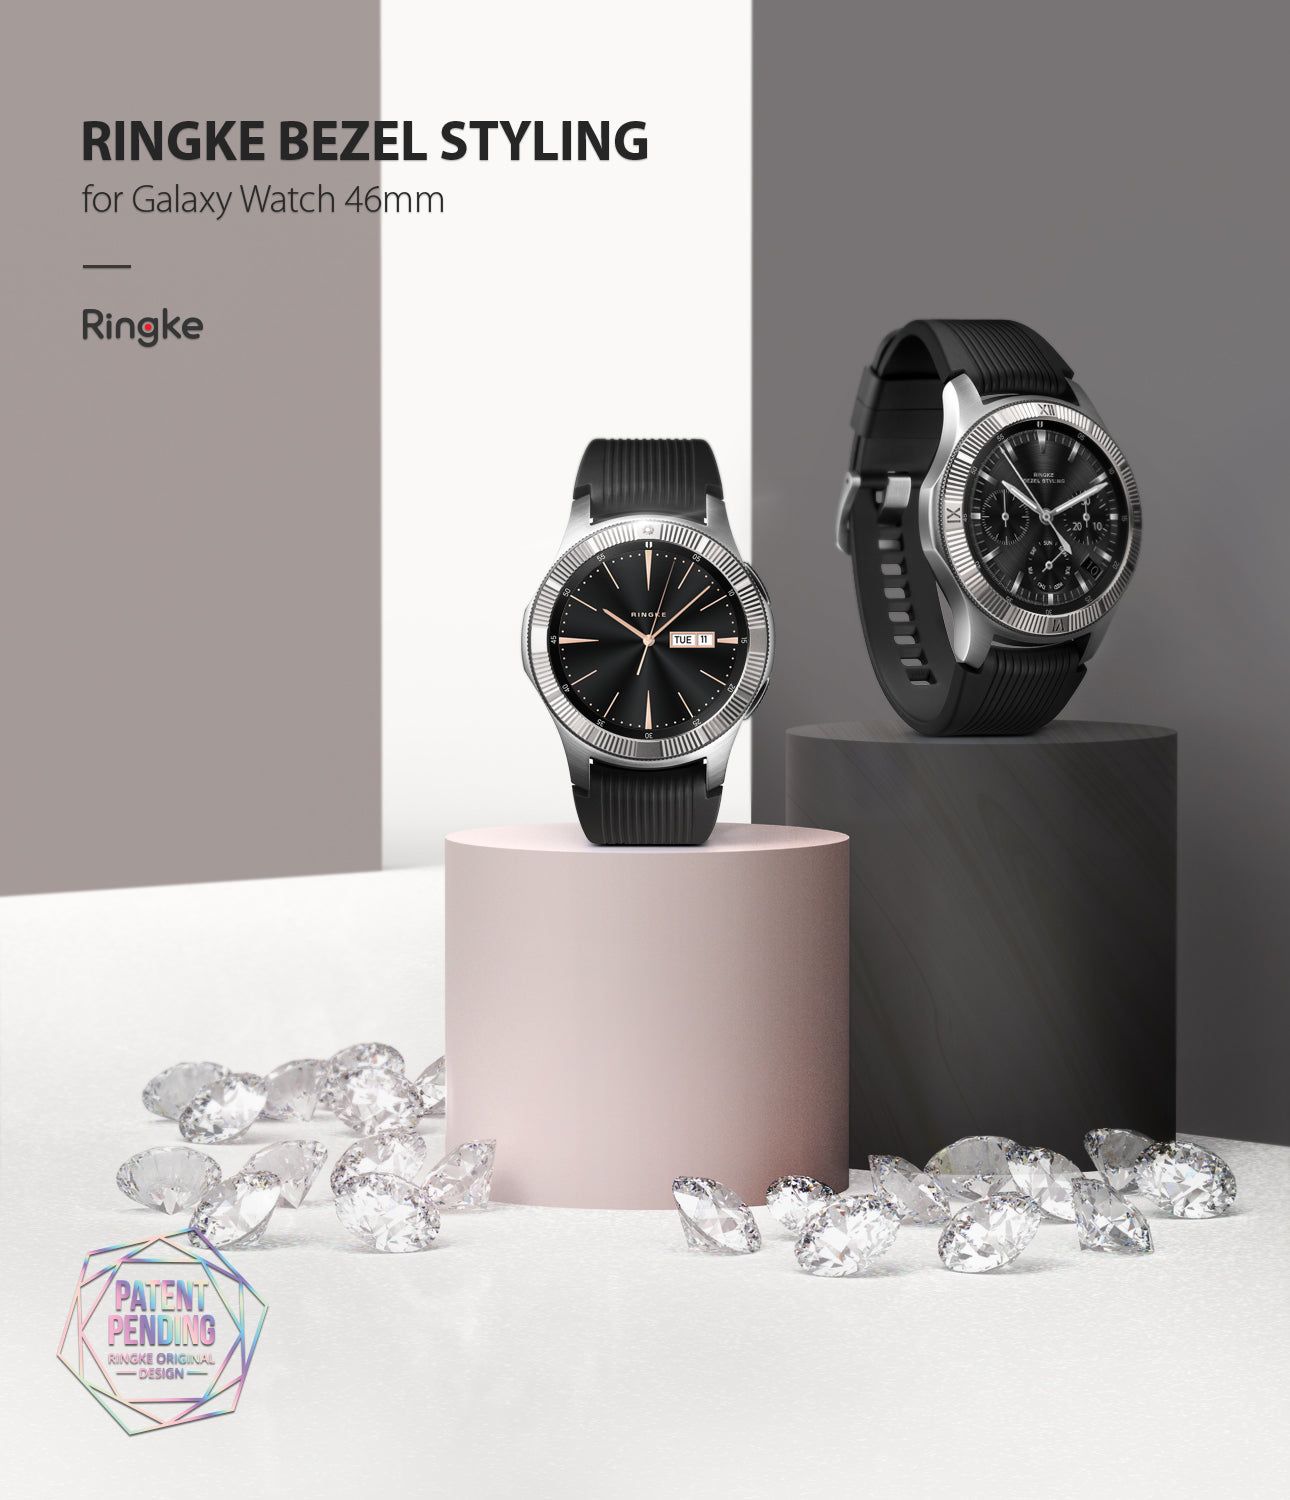 ringke bezel styling for galaxy watch 46mm showing 46-13 on